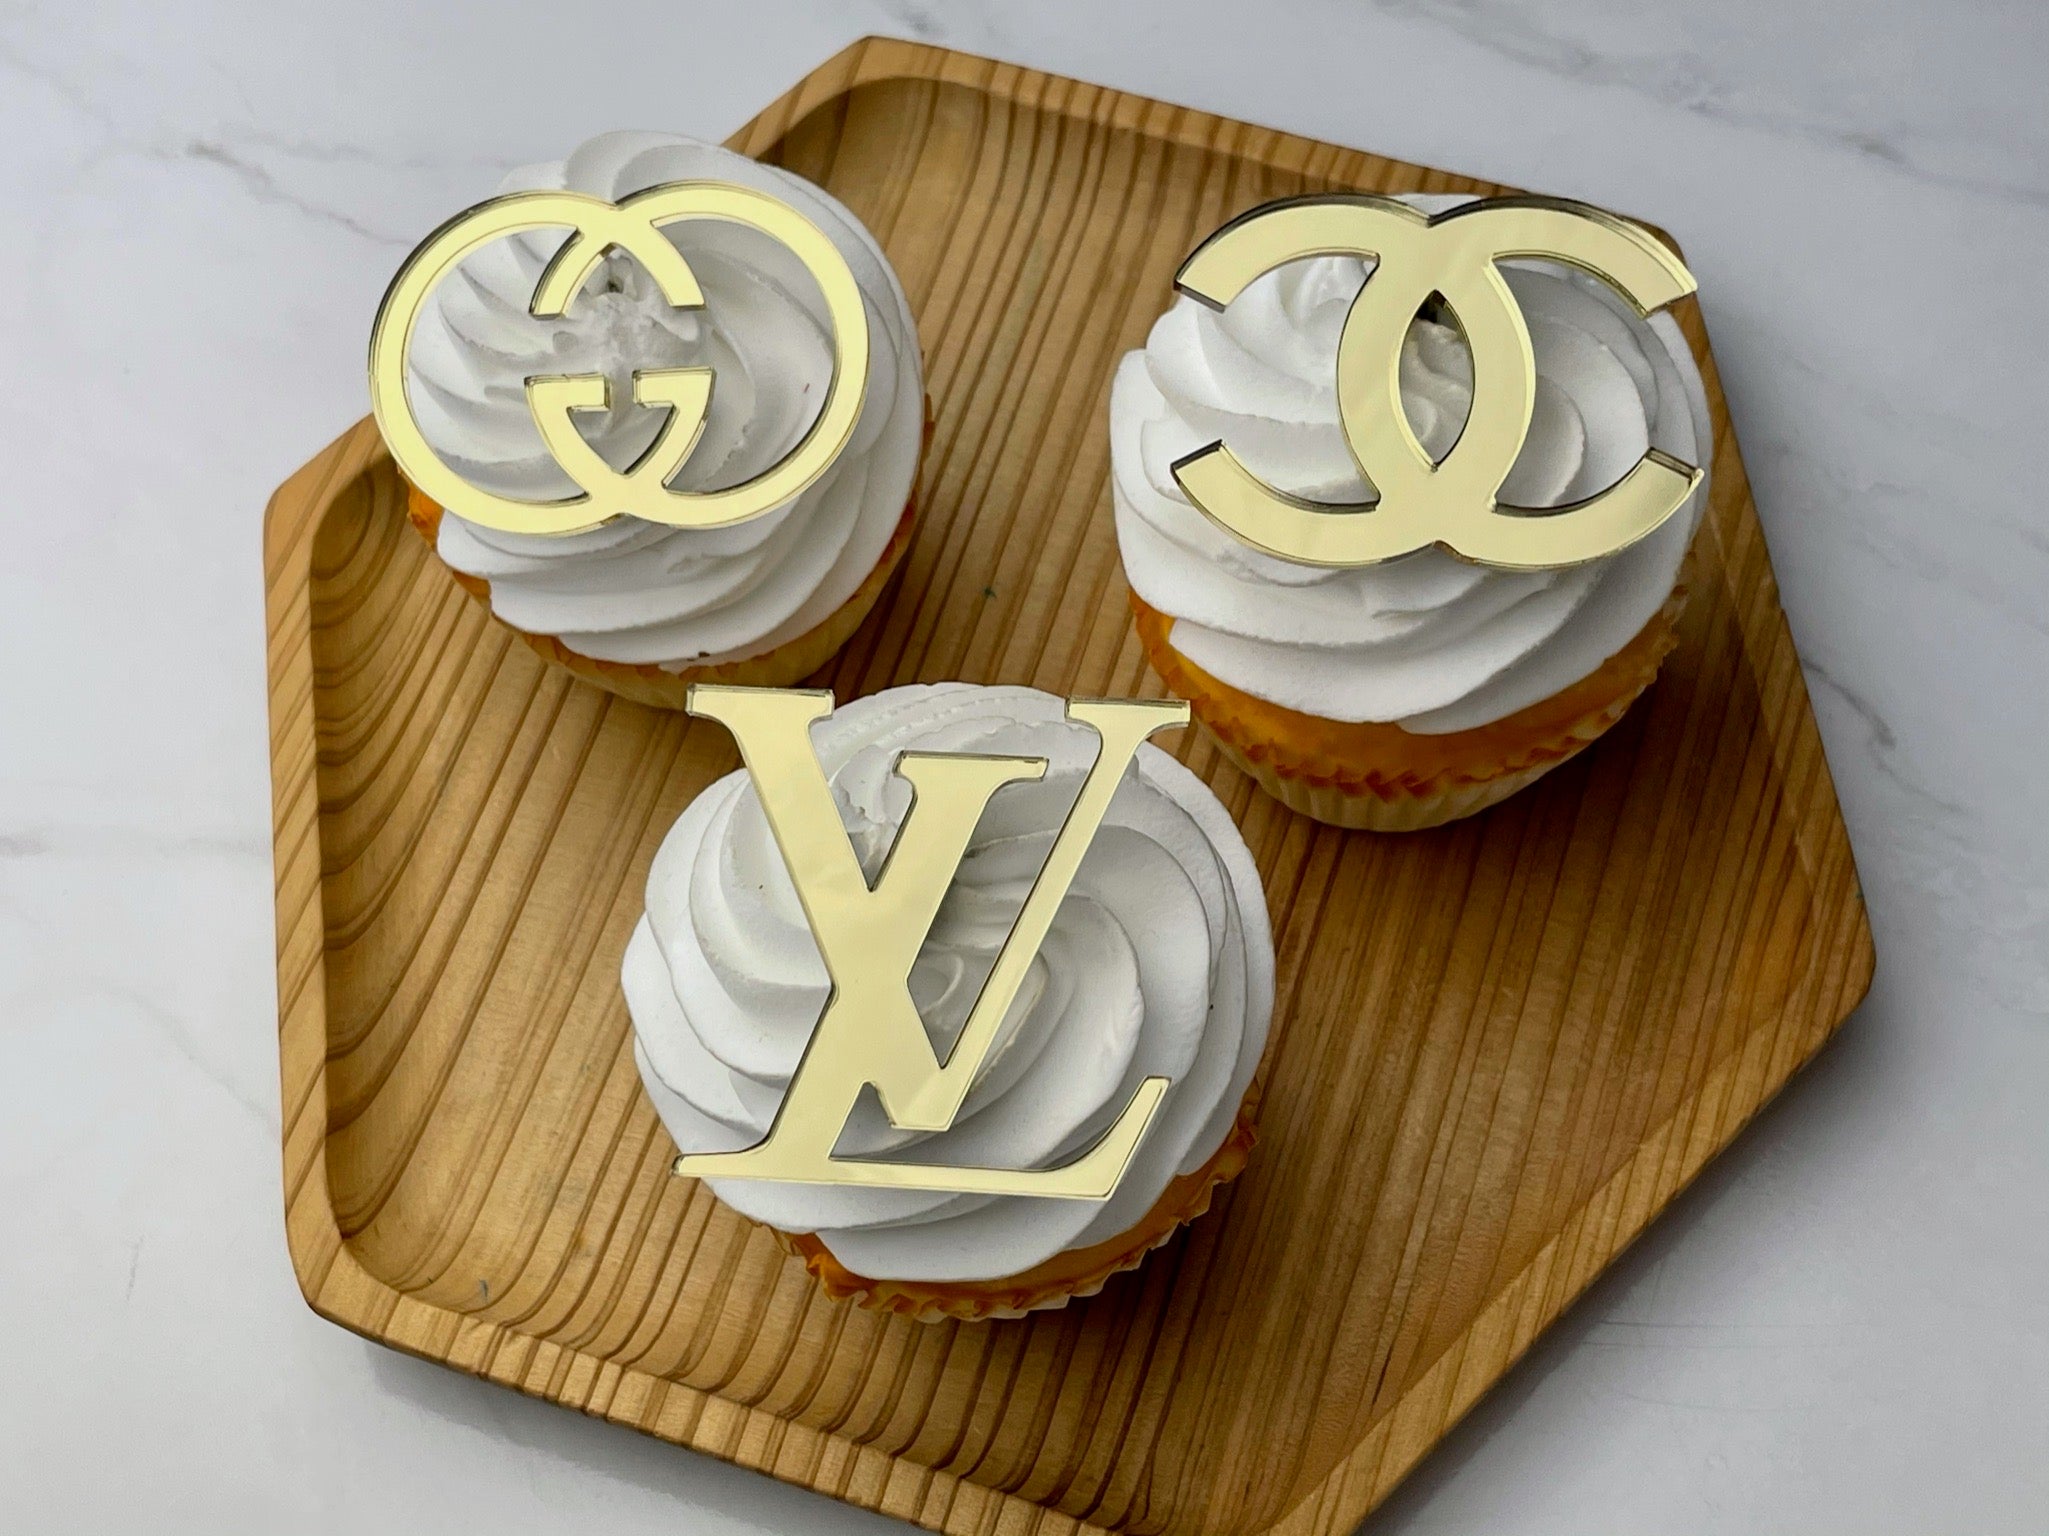 lv logo cupcake toppers